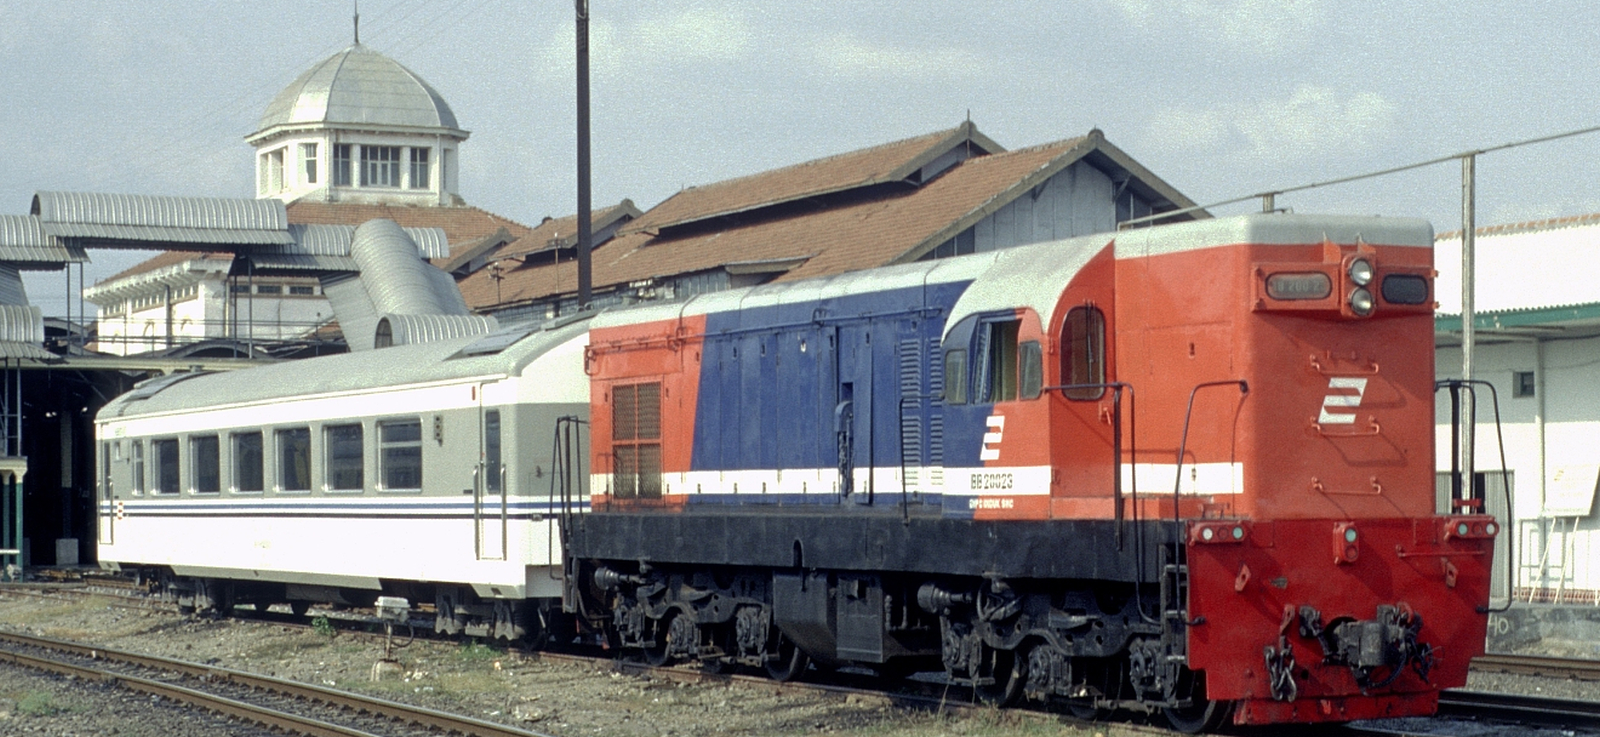 BB 200 23 of Indonesian Railways KAI in July 2002